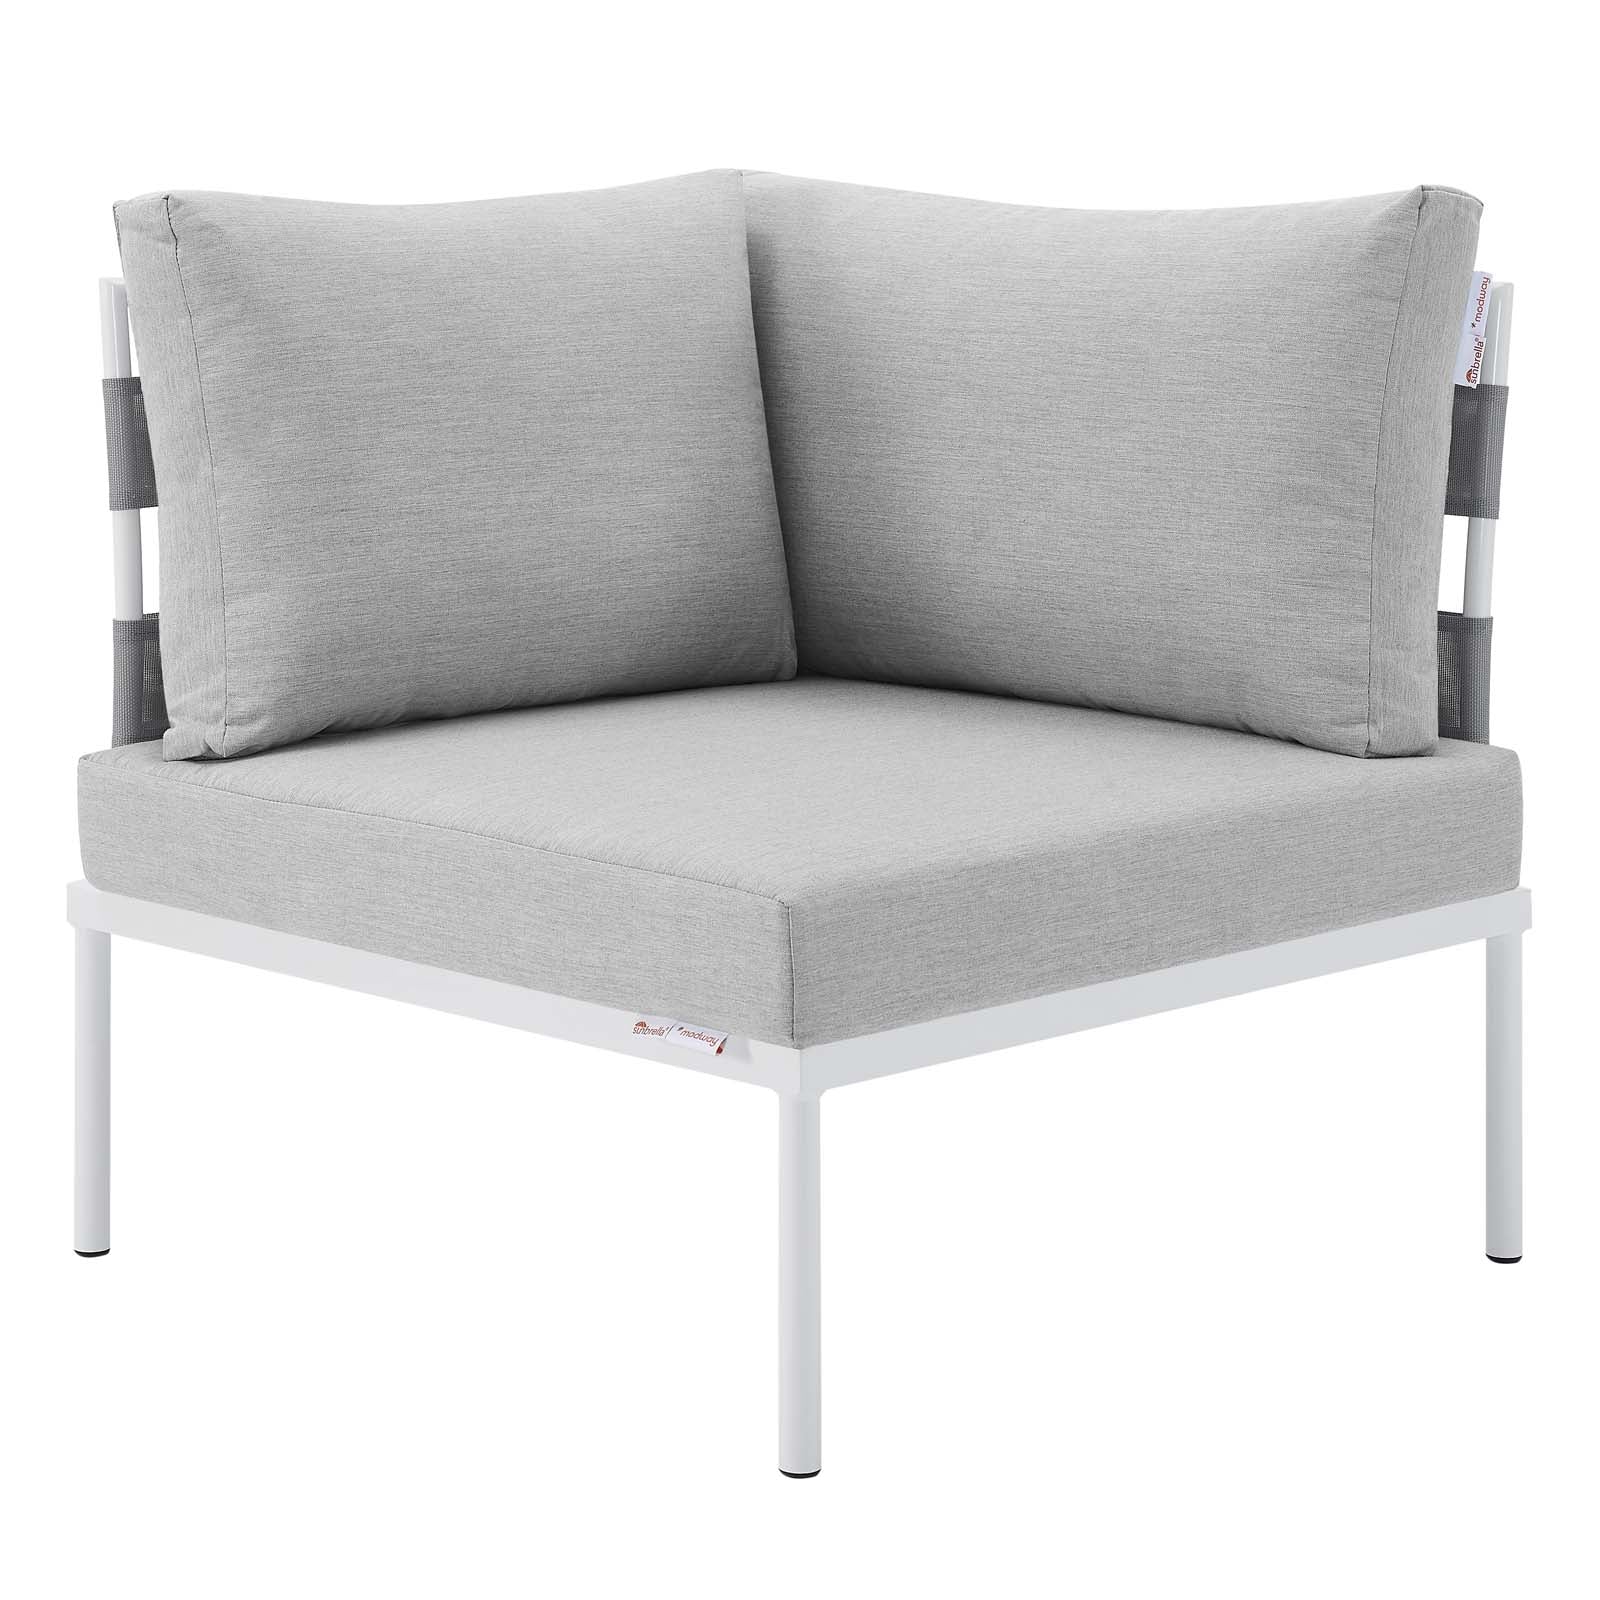 Modway Outdoor Conversation Sets - Harmony 6 Piece Sunbrella Outdoor Patio Aluminum Sectional Sofa Set Gray